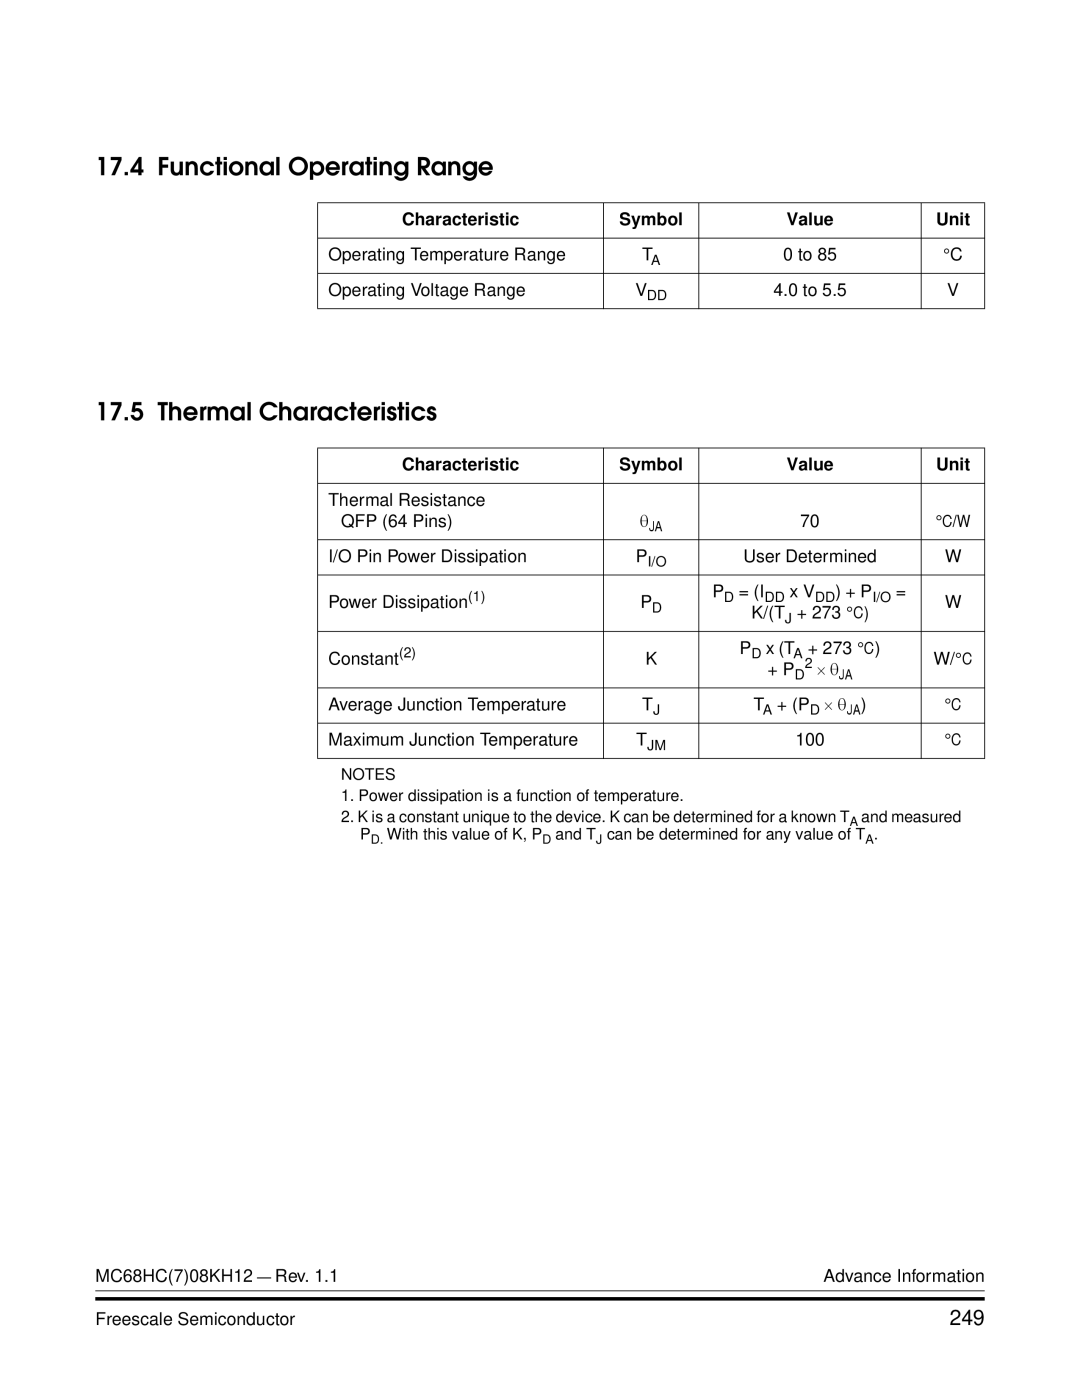 Freescale Semiconductor MC68HC08KH12 manual Functional Operating Range, Thermal Characteristics, 249 